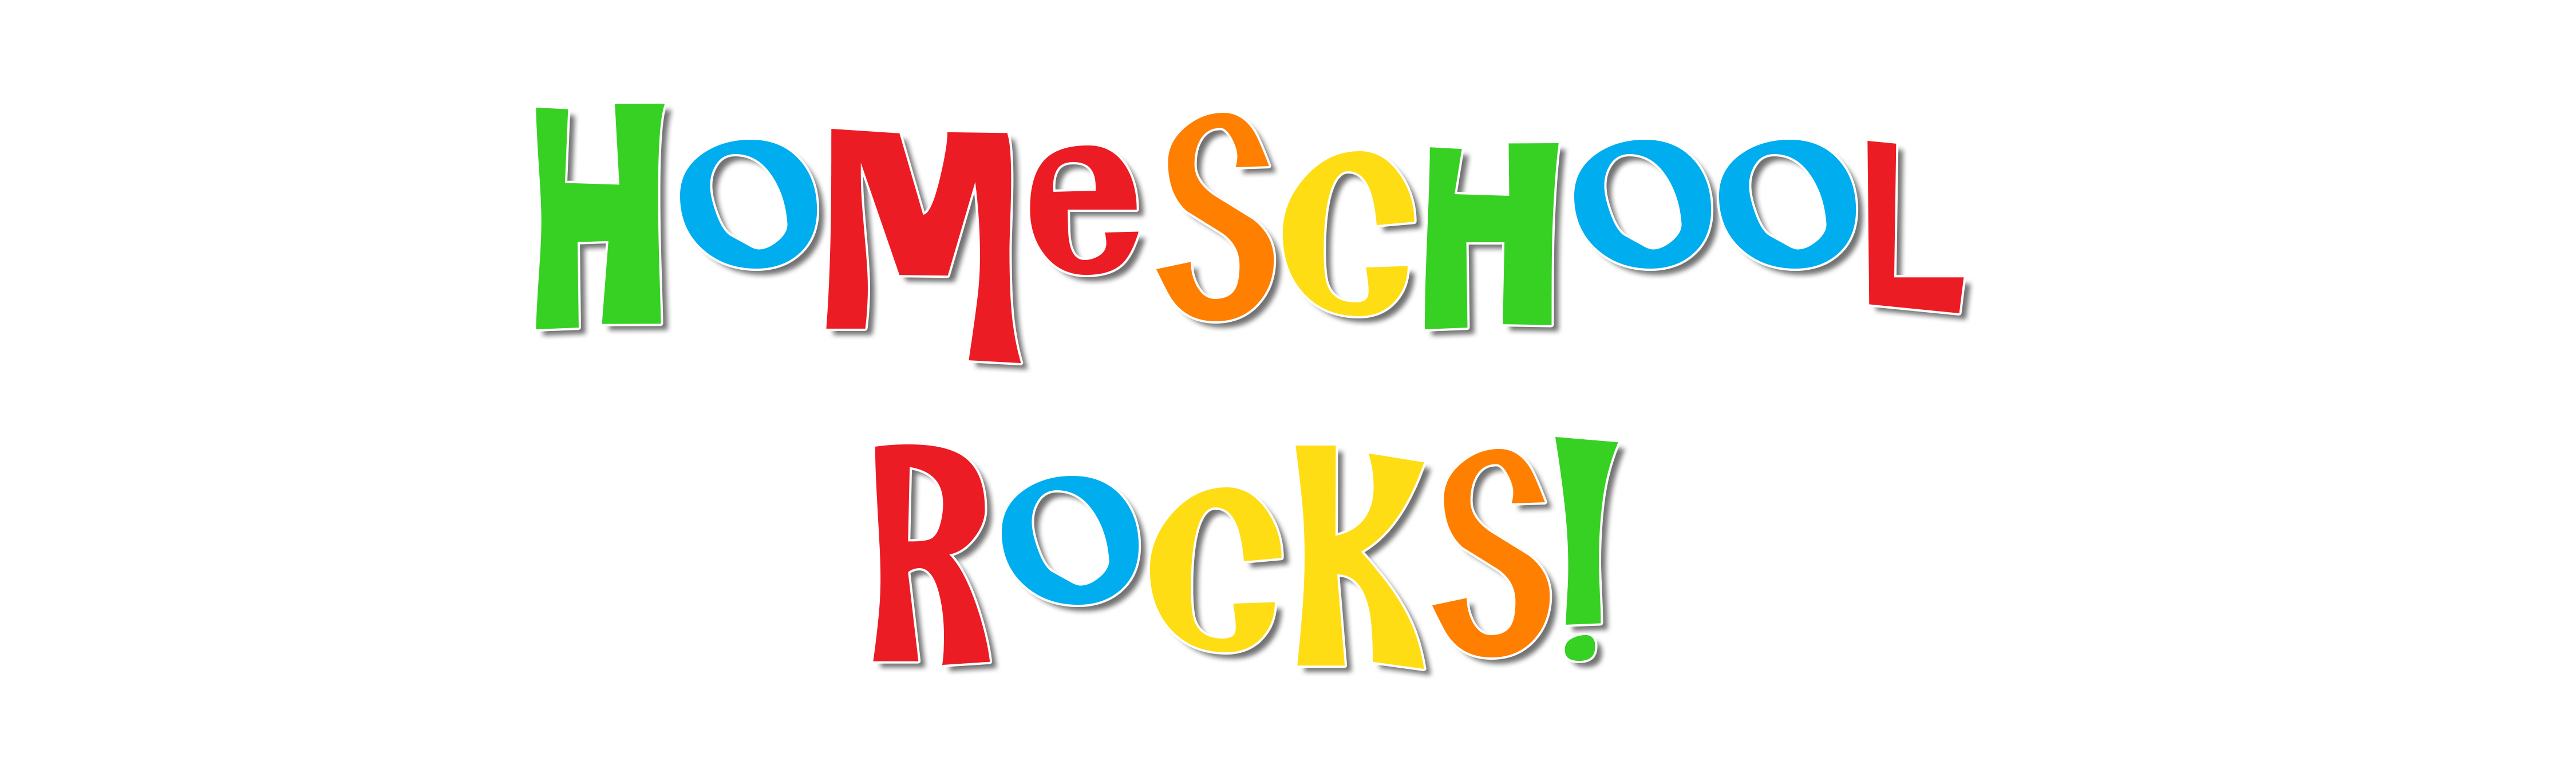 text: Homeschool Rocks!